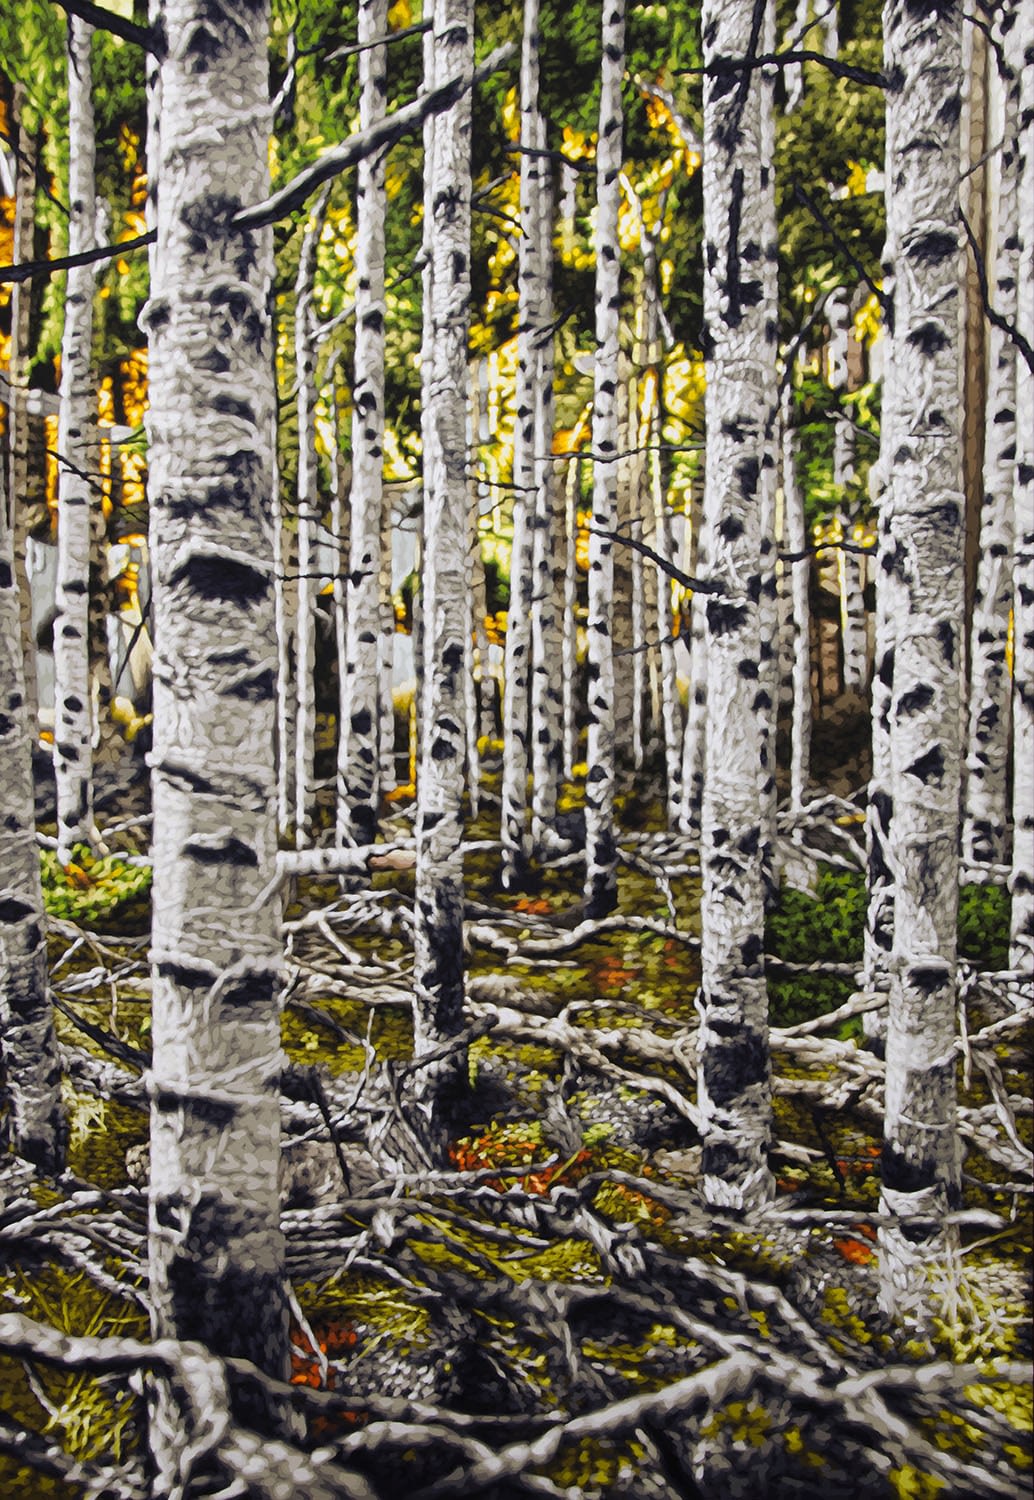 Philipp Fröhlich, Aspen trees, Pando, (190L), 2015. tempera on canvas, 175 x 120 cm